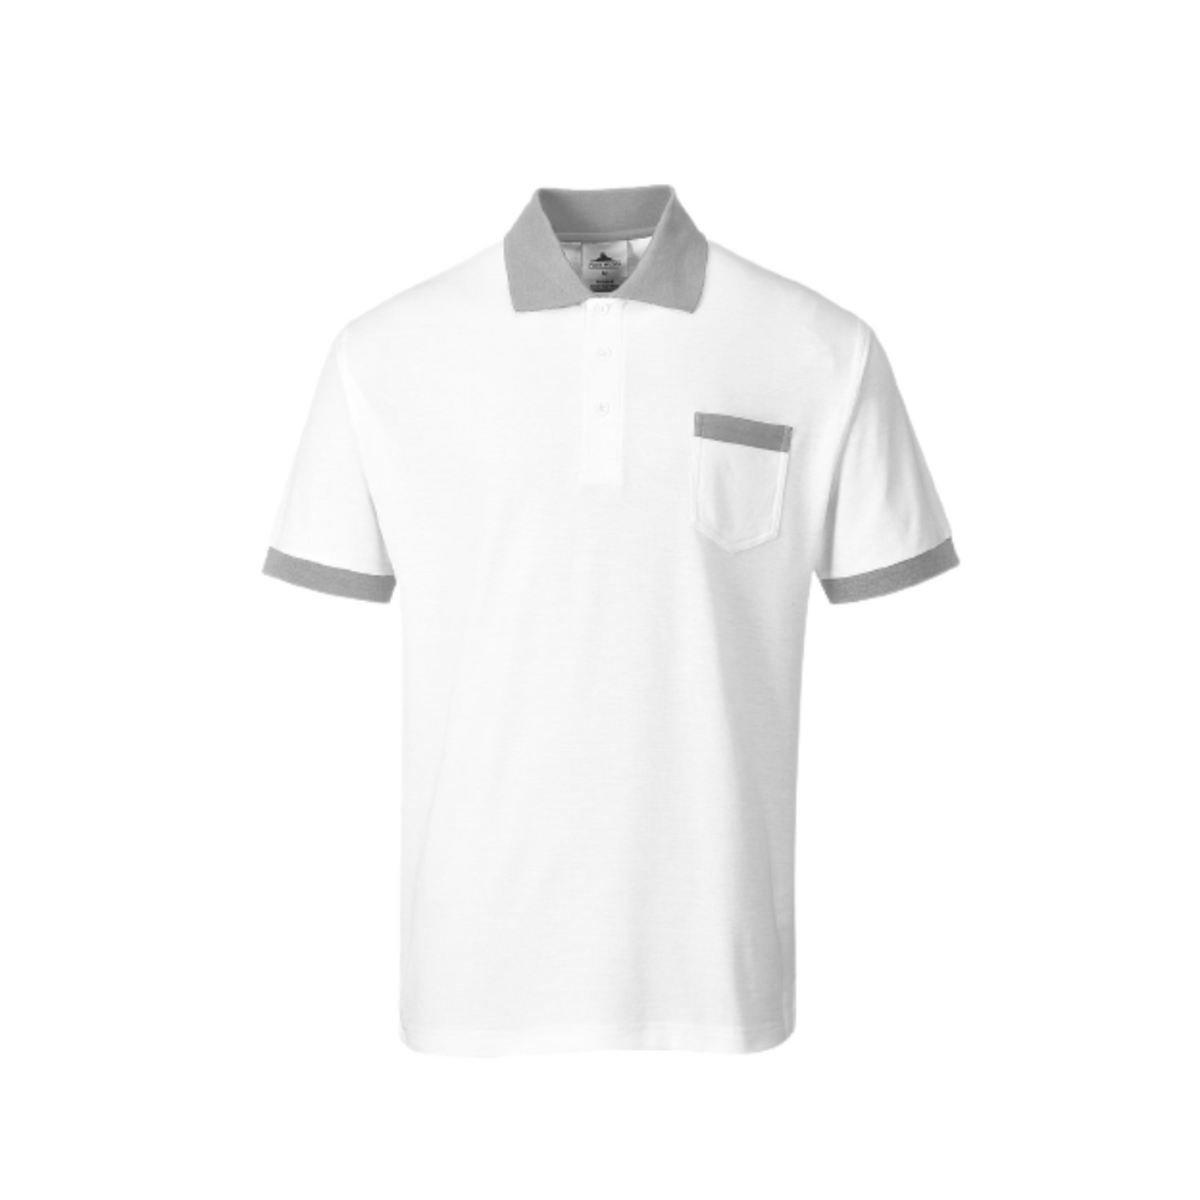 Portwest Painters Pro Polo Poly Cottin Rib Collar Short Sleeve Shirt KS51-Collins Clothing Co